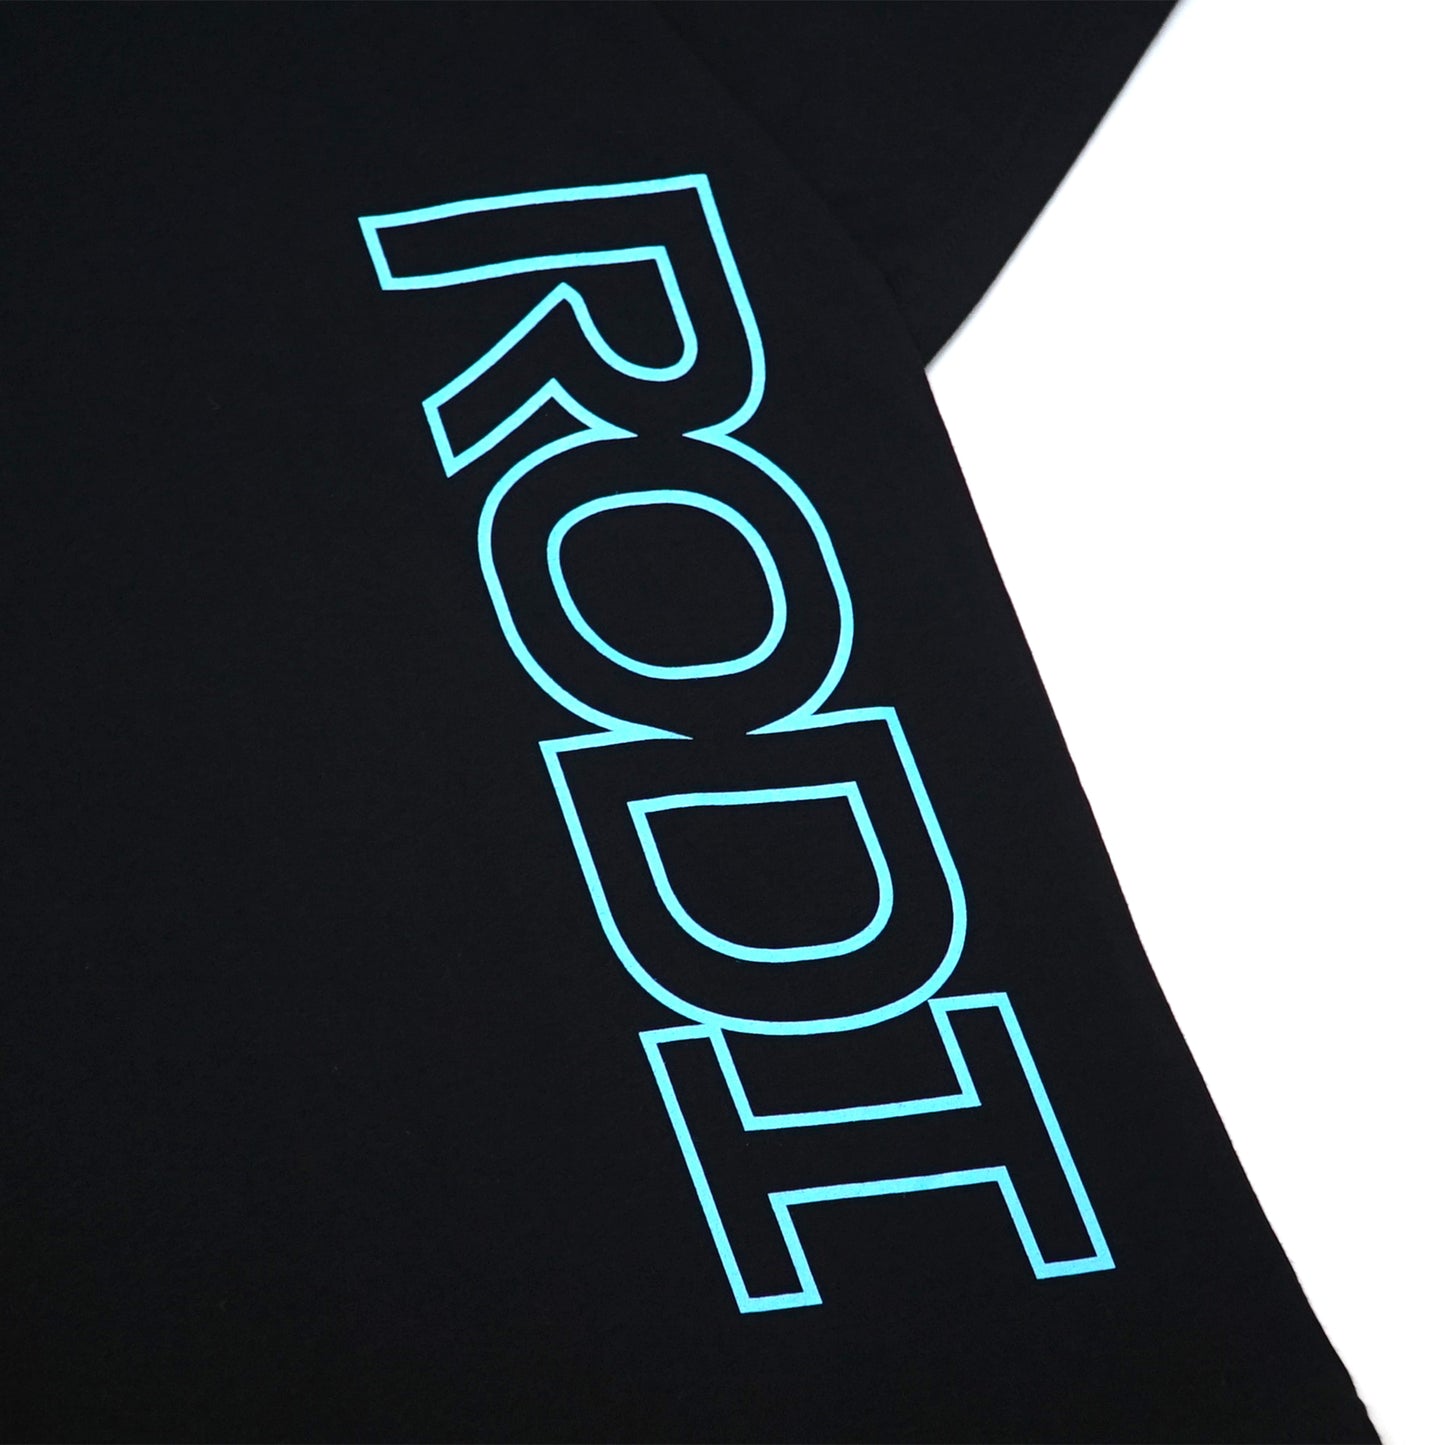 RODI - Creed T-Shirt/Black